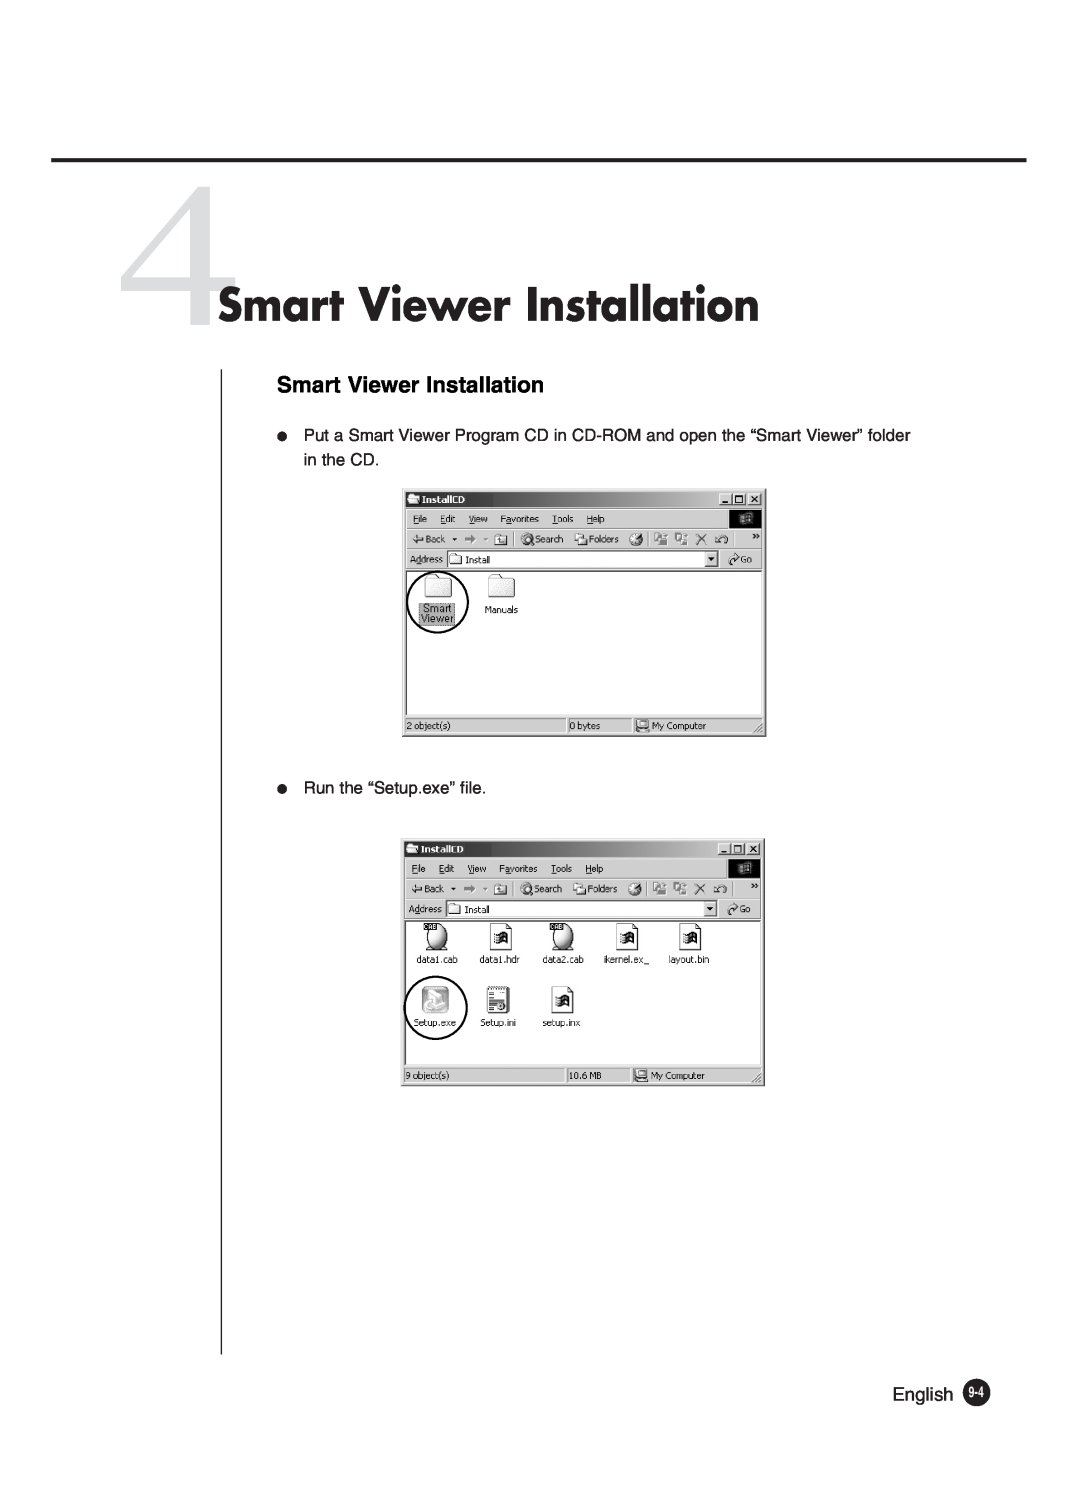 Samsung SHR-2040P250, SHR-2042P250 manual 4Smart Viewer Installation 